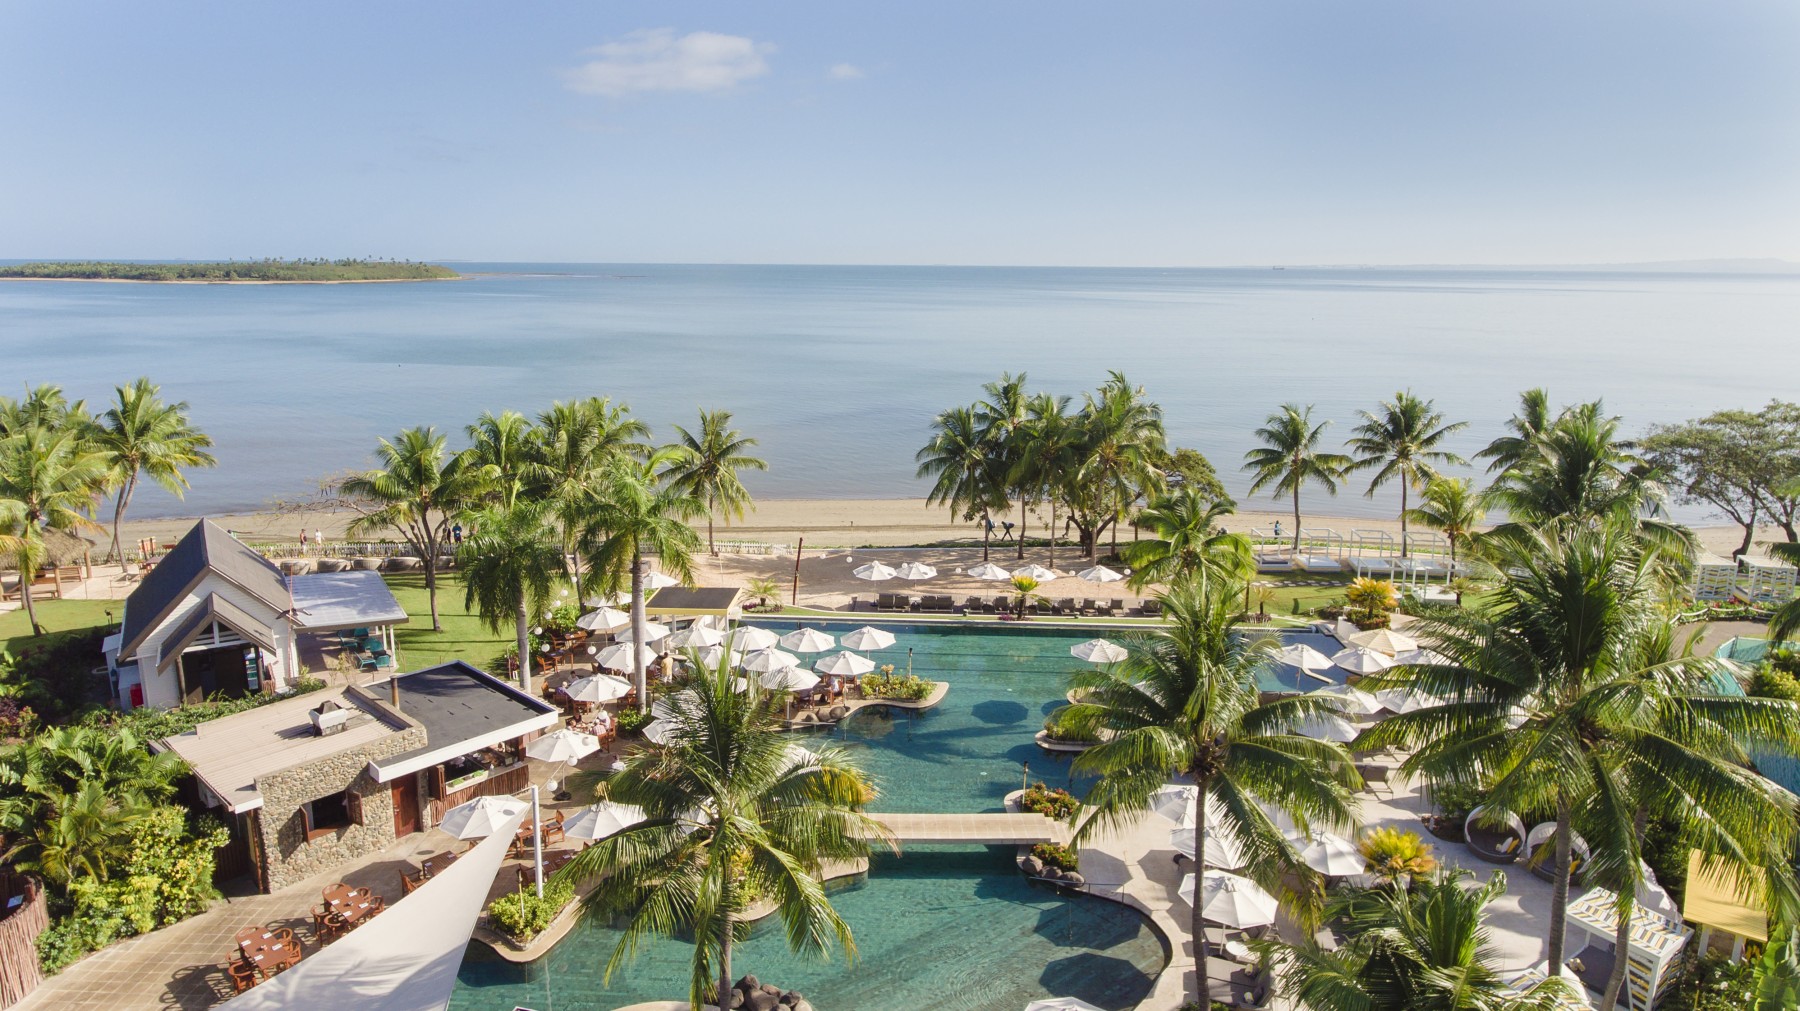 Sofitel Fiji Resort And Spa Landscape Poolside Beverage Menu 12 09 22